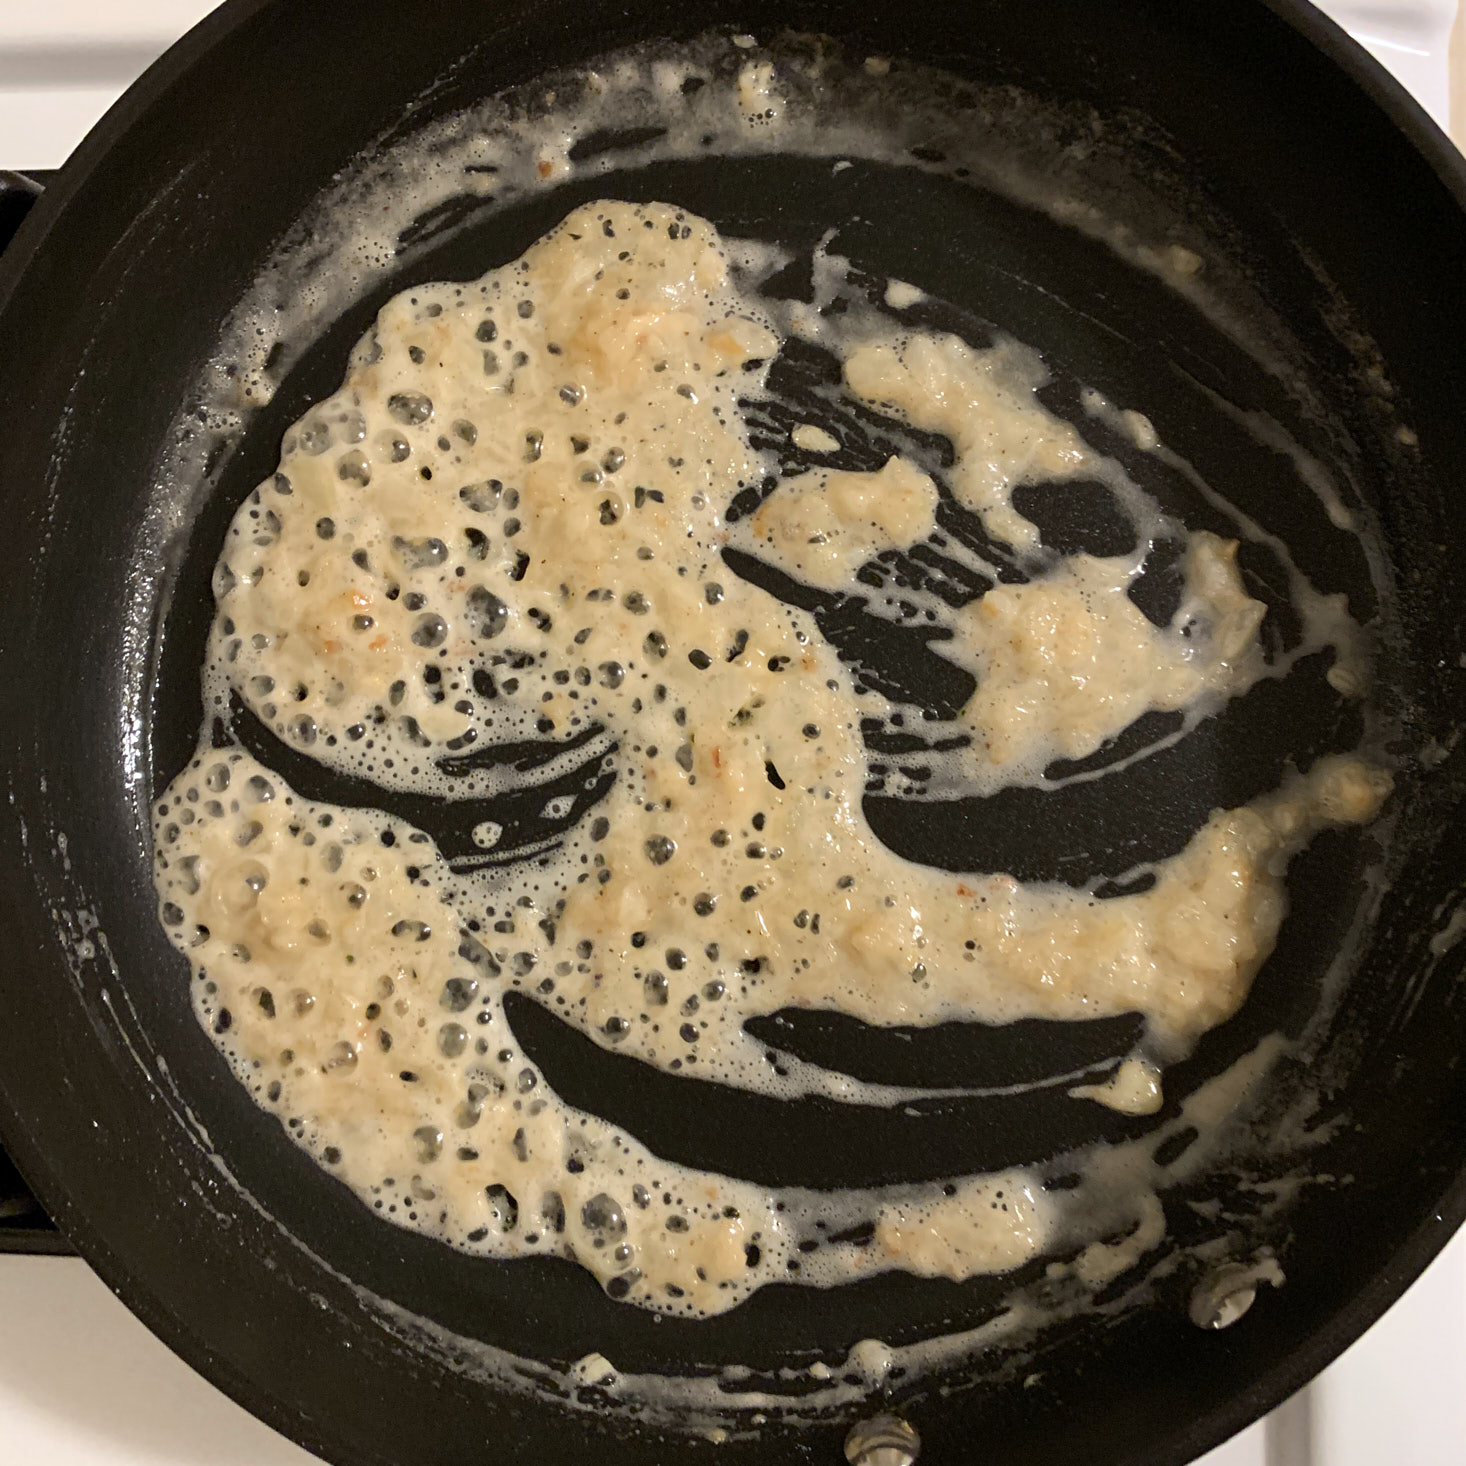 Beginning of sauce in pan